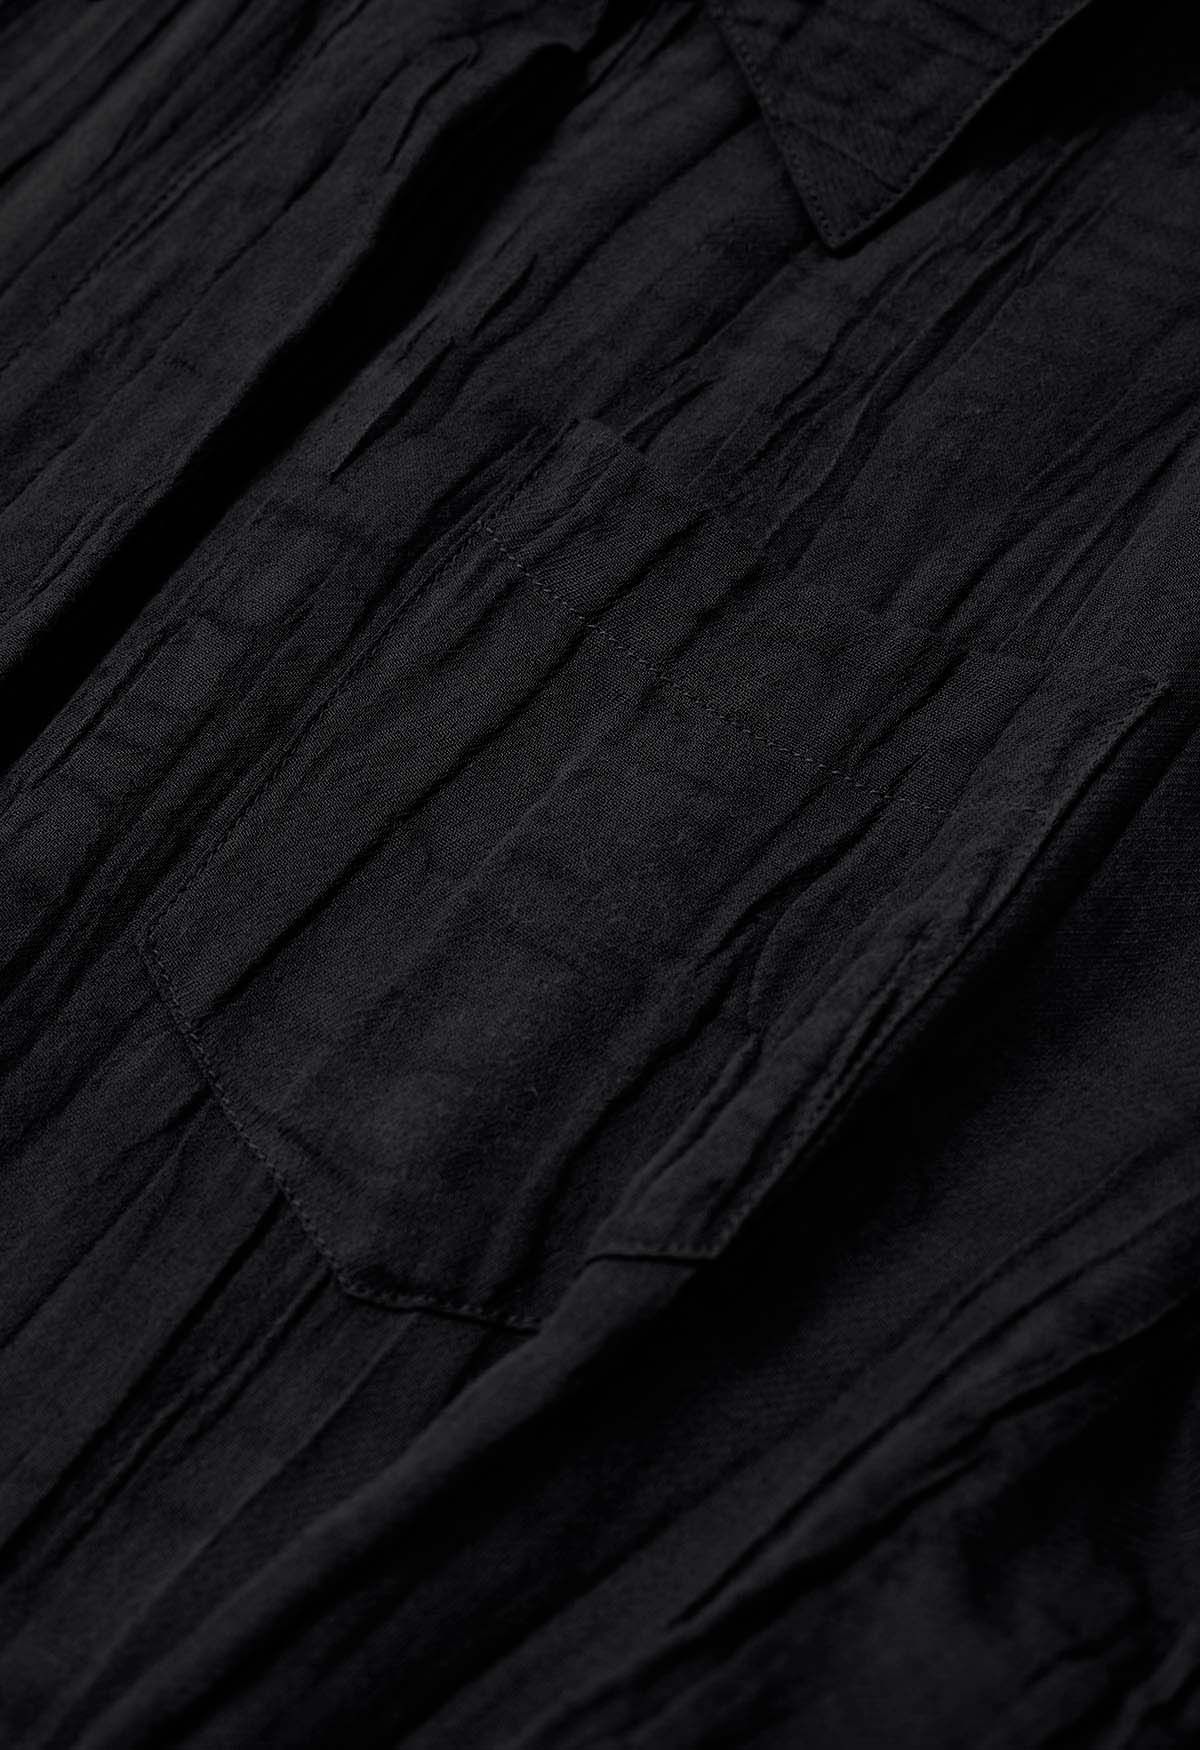 Elbow Sleeve Tie-Waist Buttoned Shirt Dress in Black